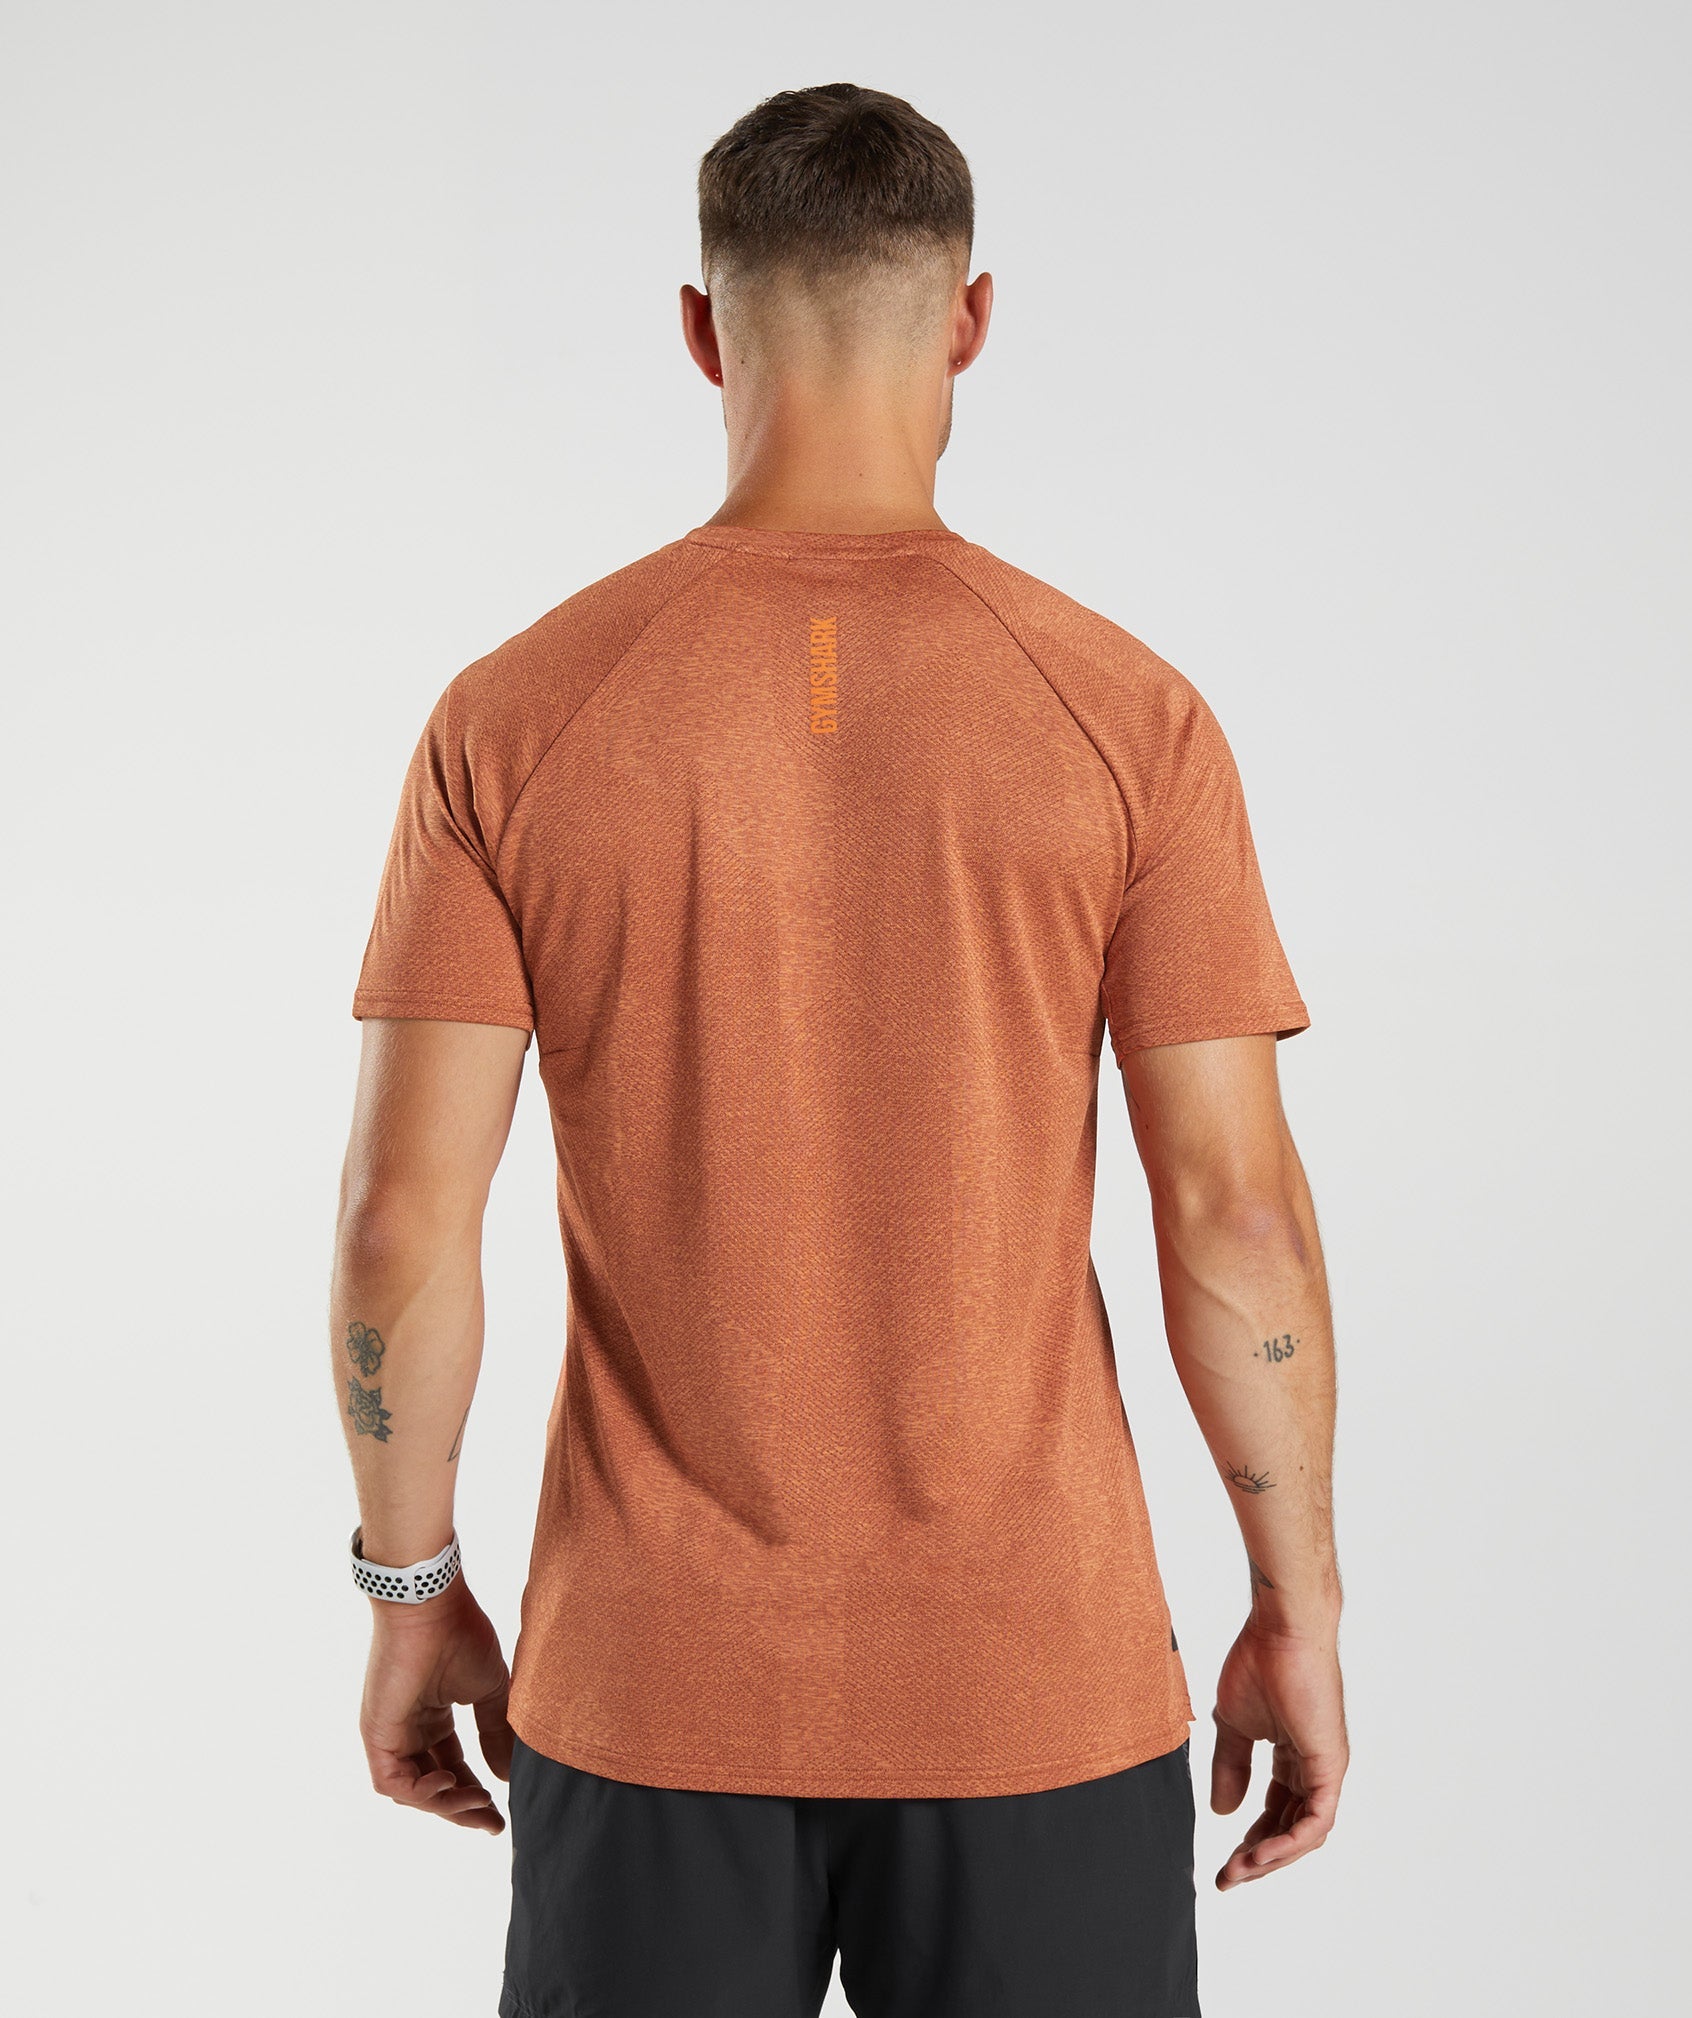 Apex T-Shirt in Mahogany Brown/Zesty Orange - view 2